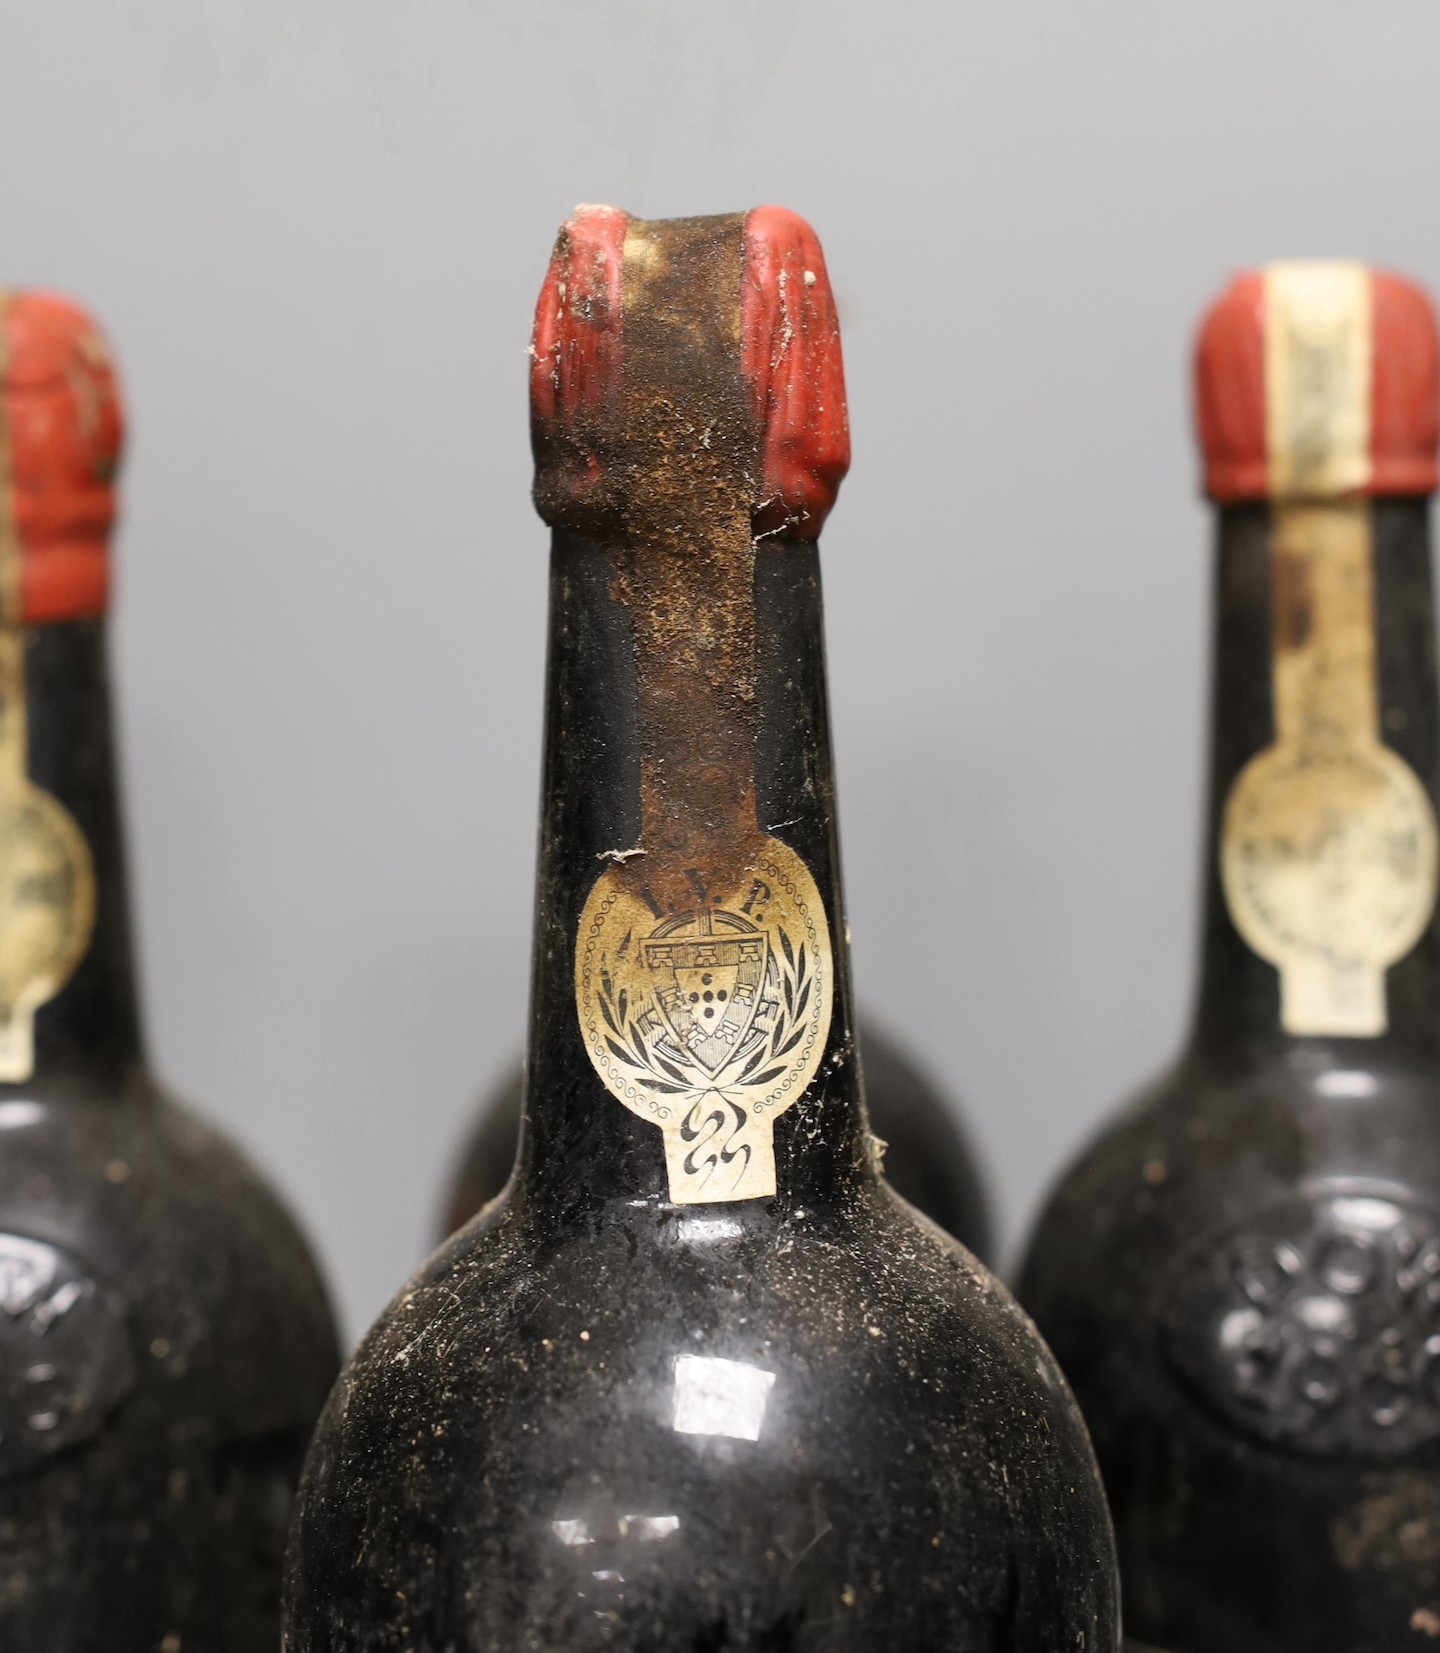 Six bottles of Dow's Vintage Port, 1960